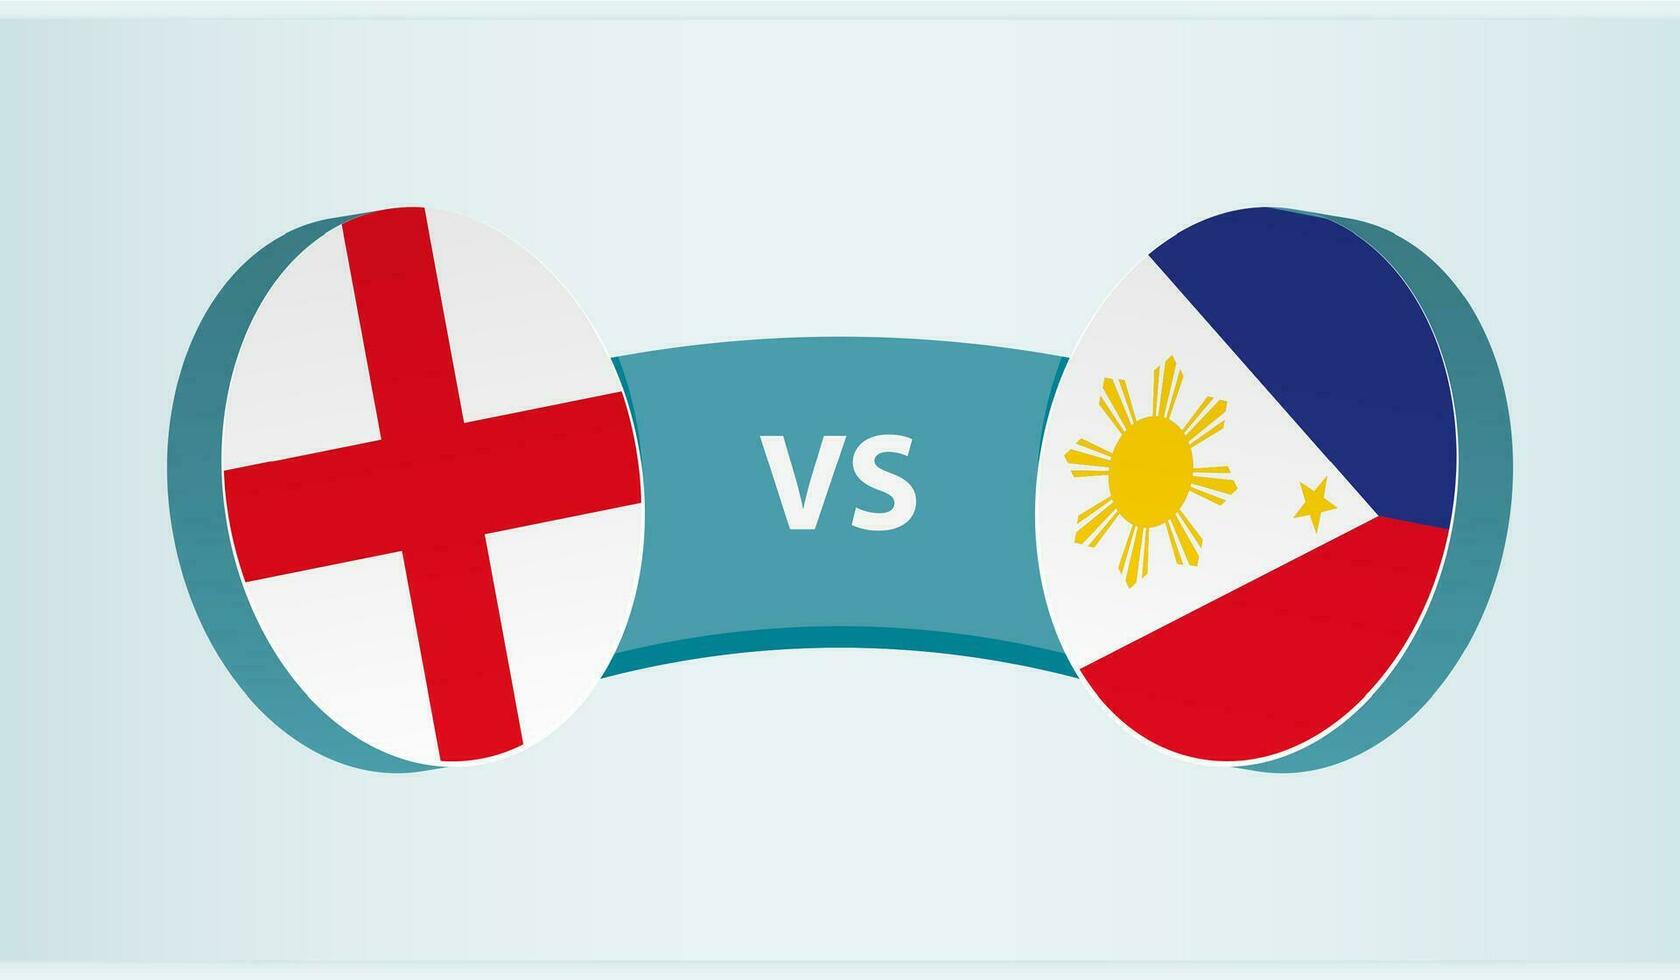 England mot Filippinerna, team sporter konkurrens begrepp. vektor